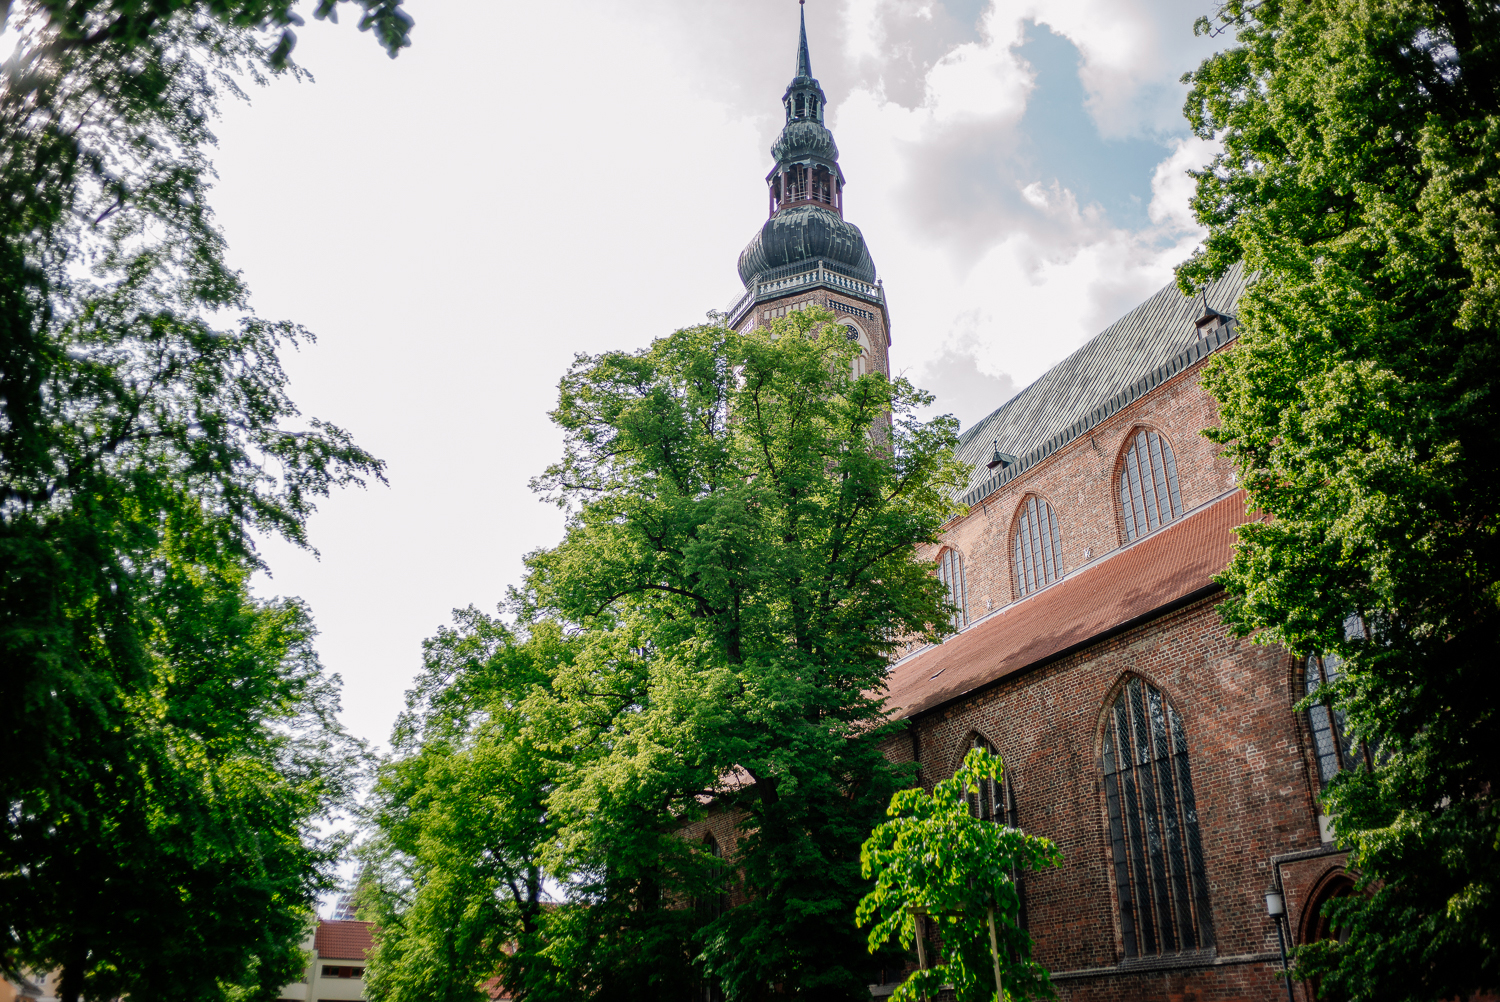 University of Greifswald, ©Till-Junker, 2019